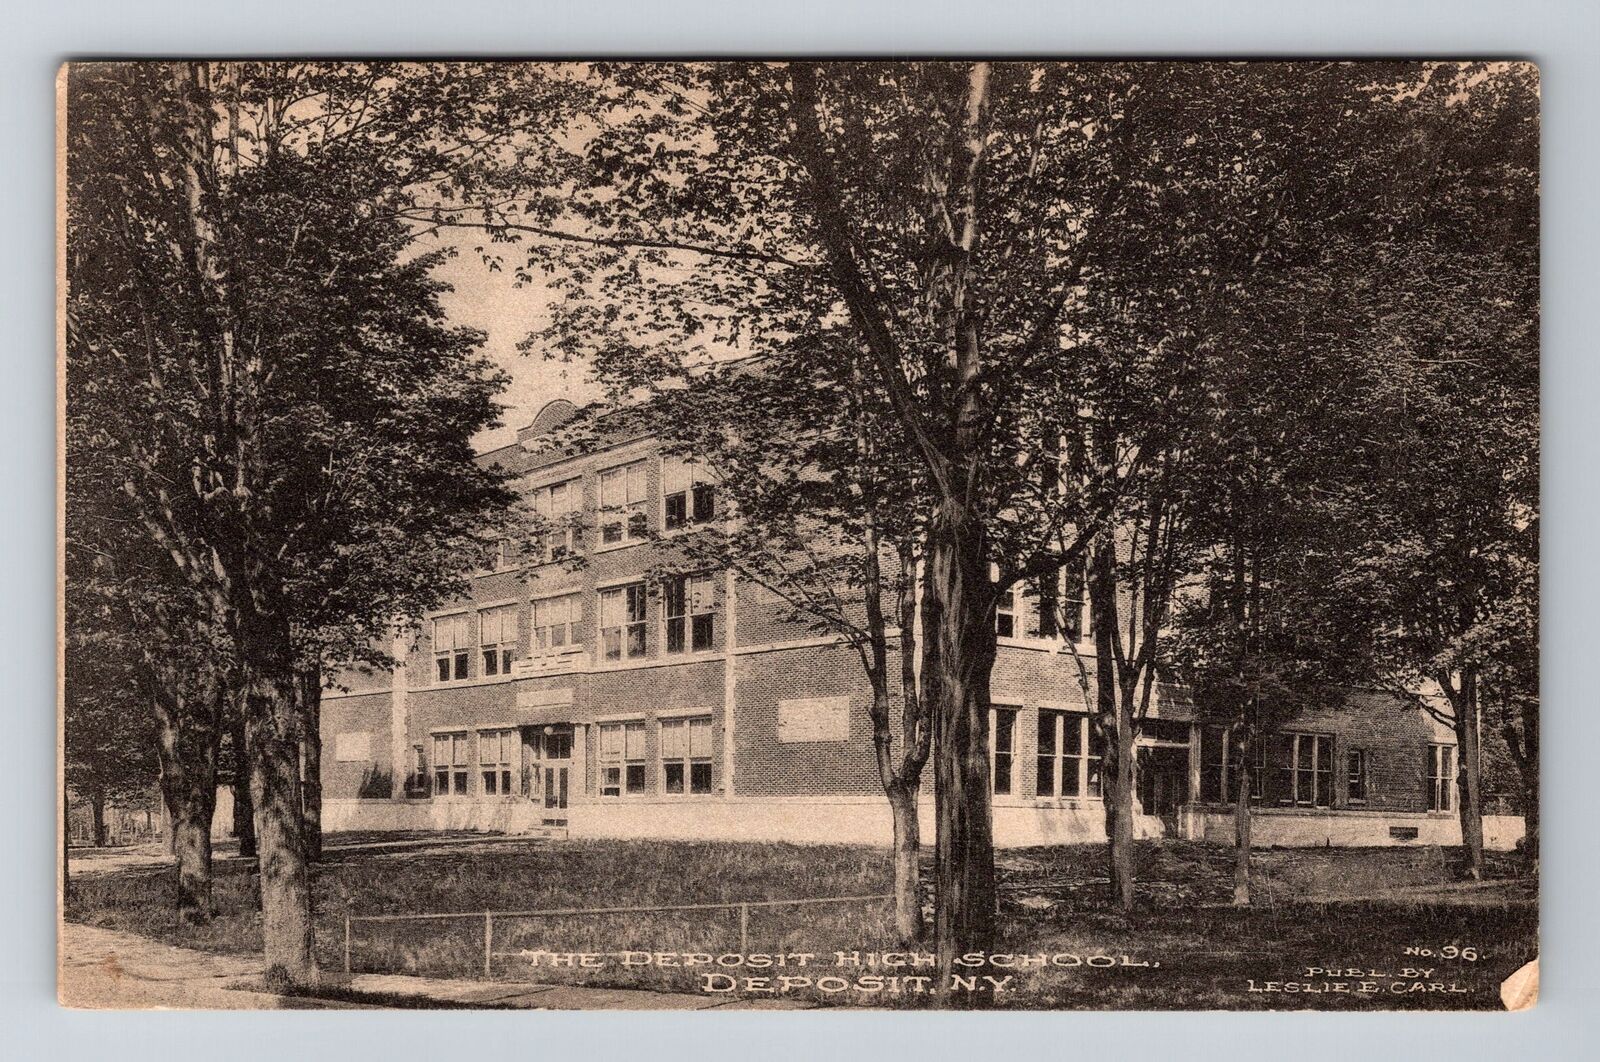 Deposit NY-New York, Deposit High School, Vintage Postcard